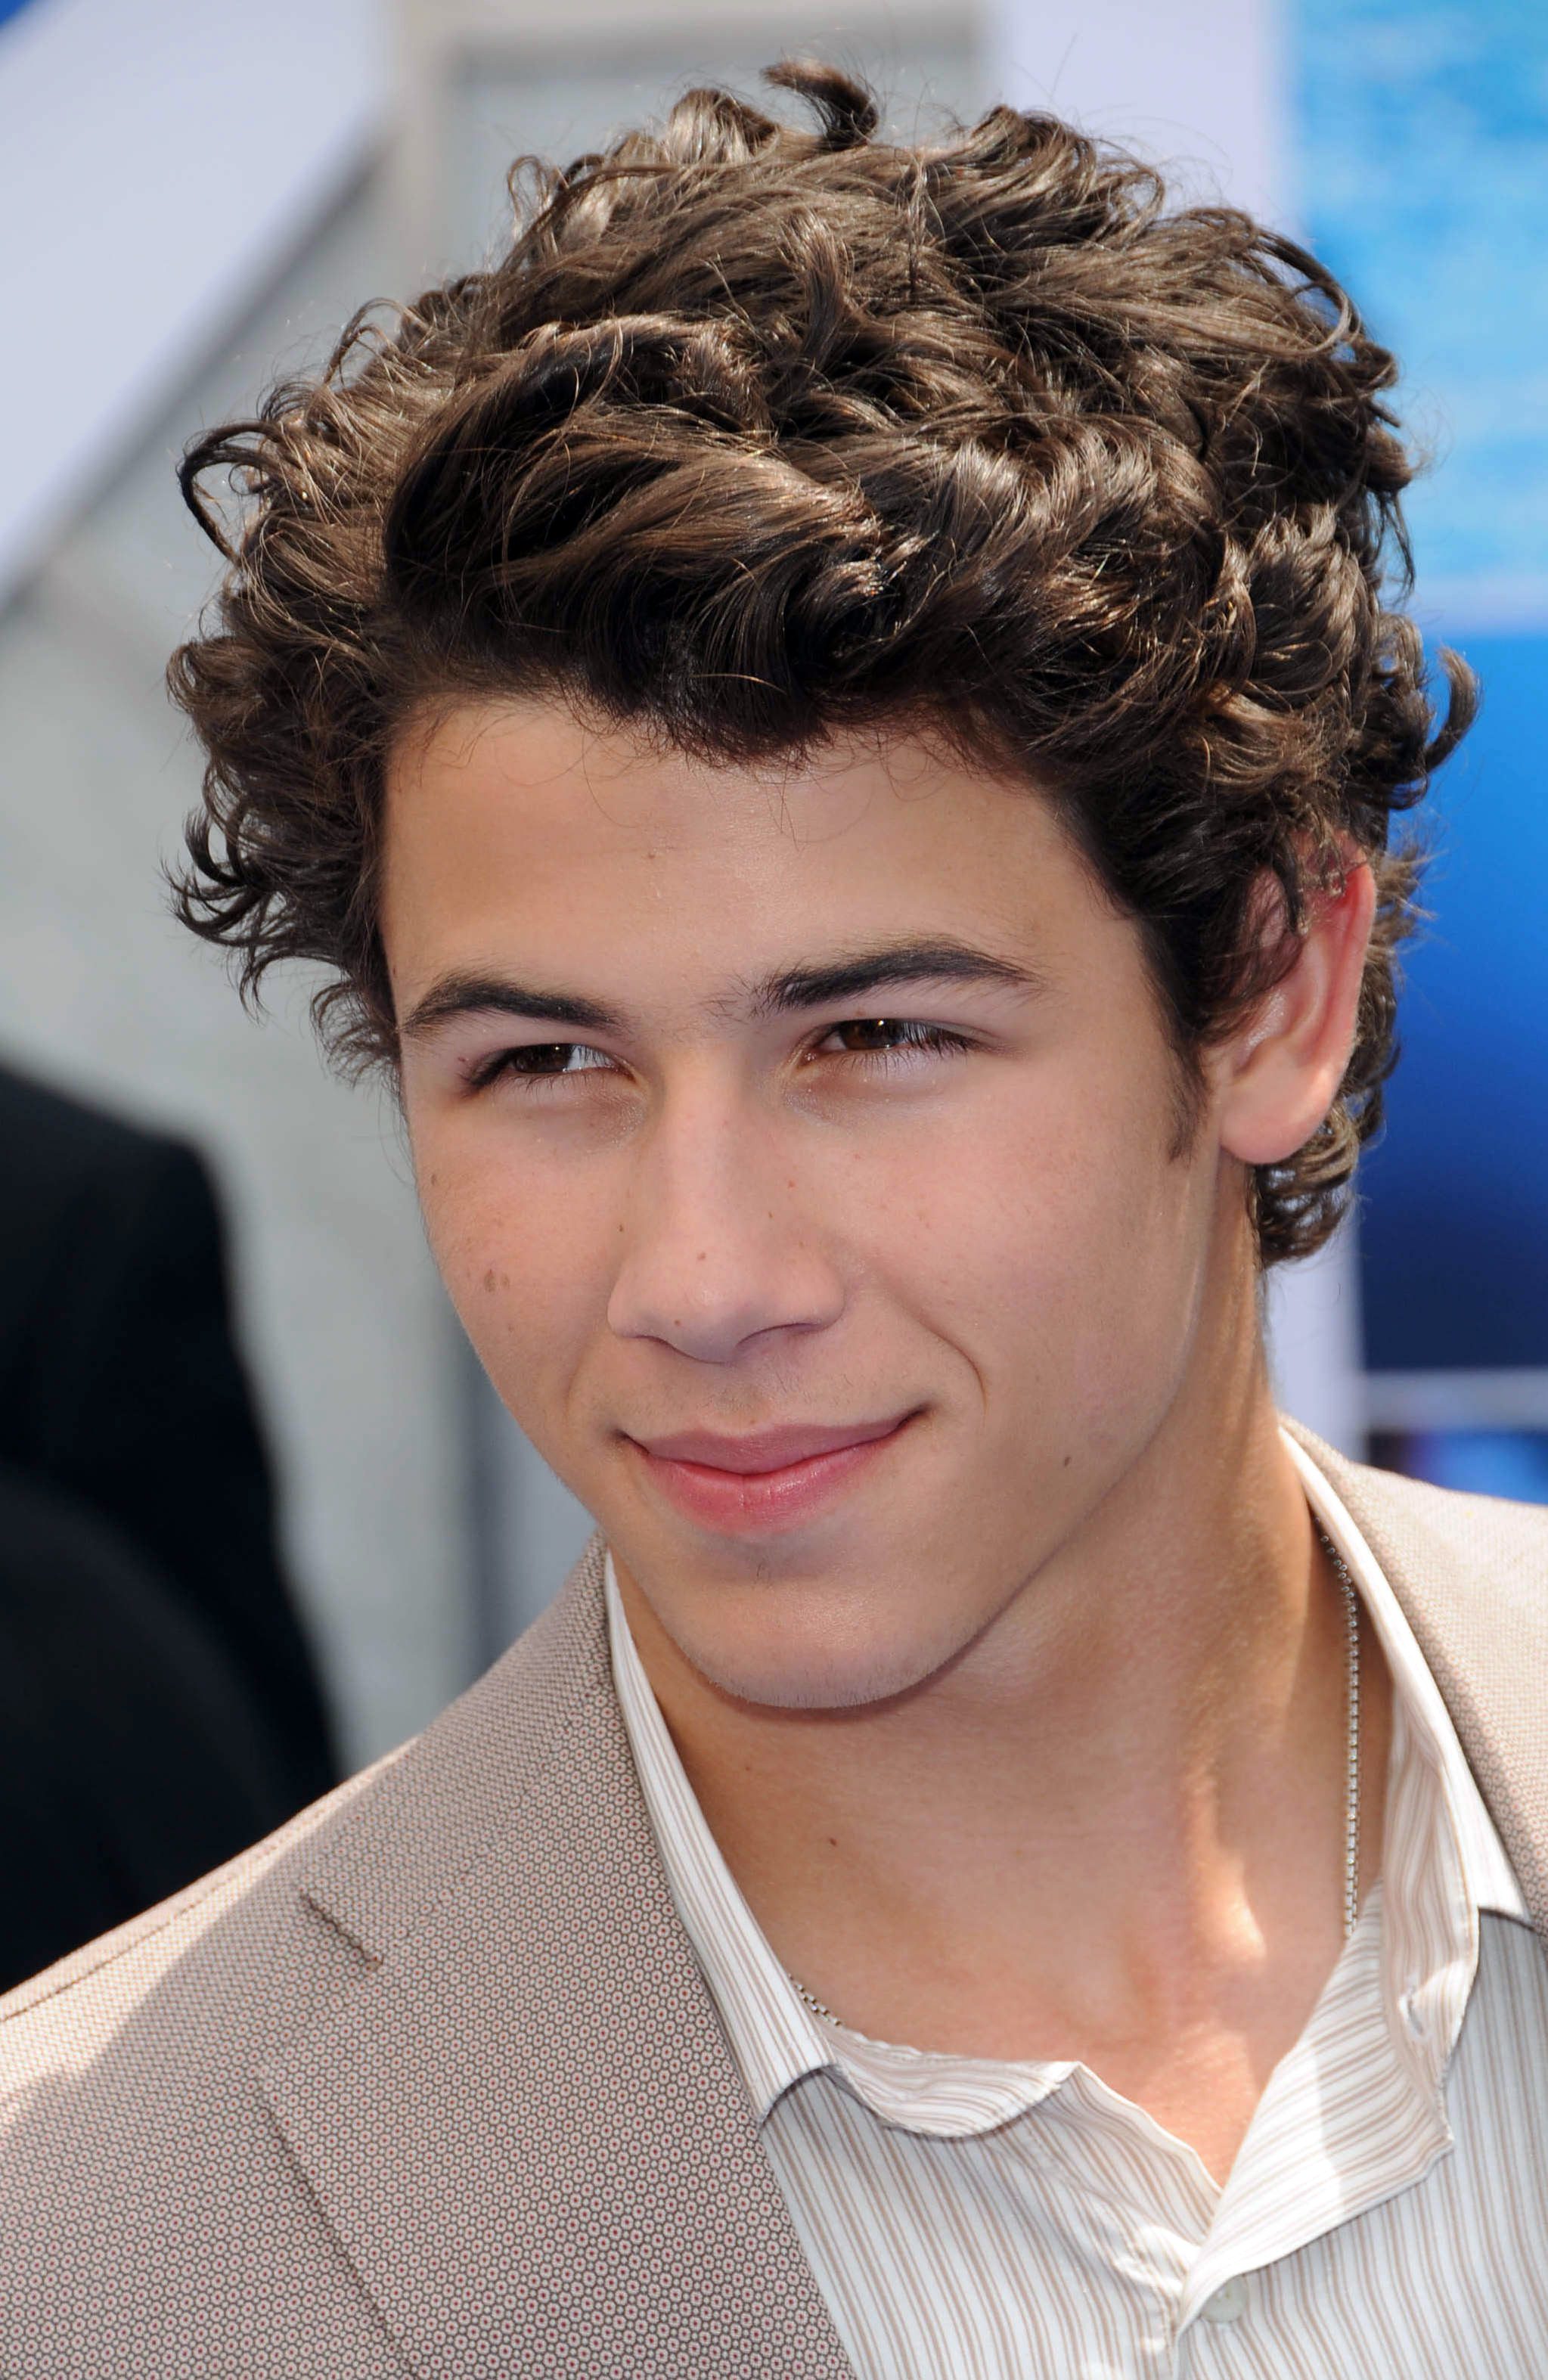 Nick Jonas's Tousled Curls